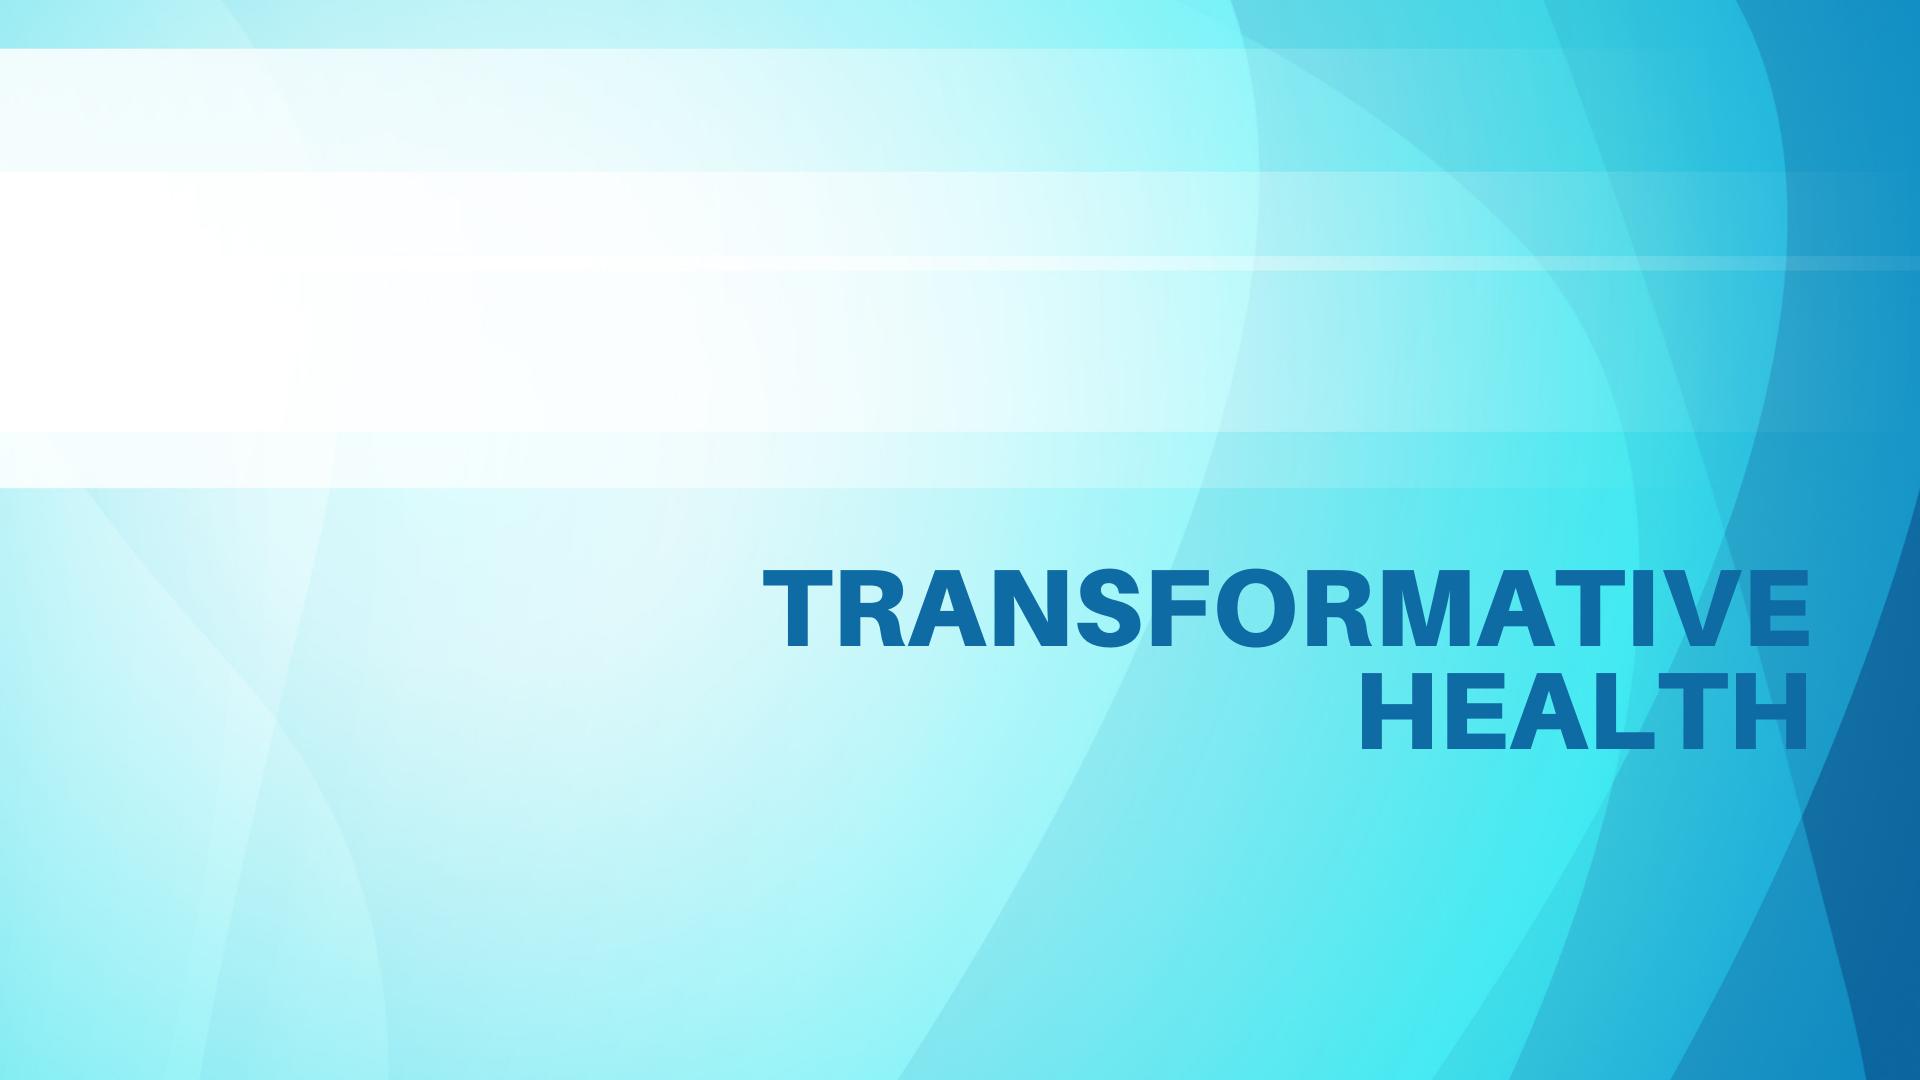 The Building Blocks of Transformative Health